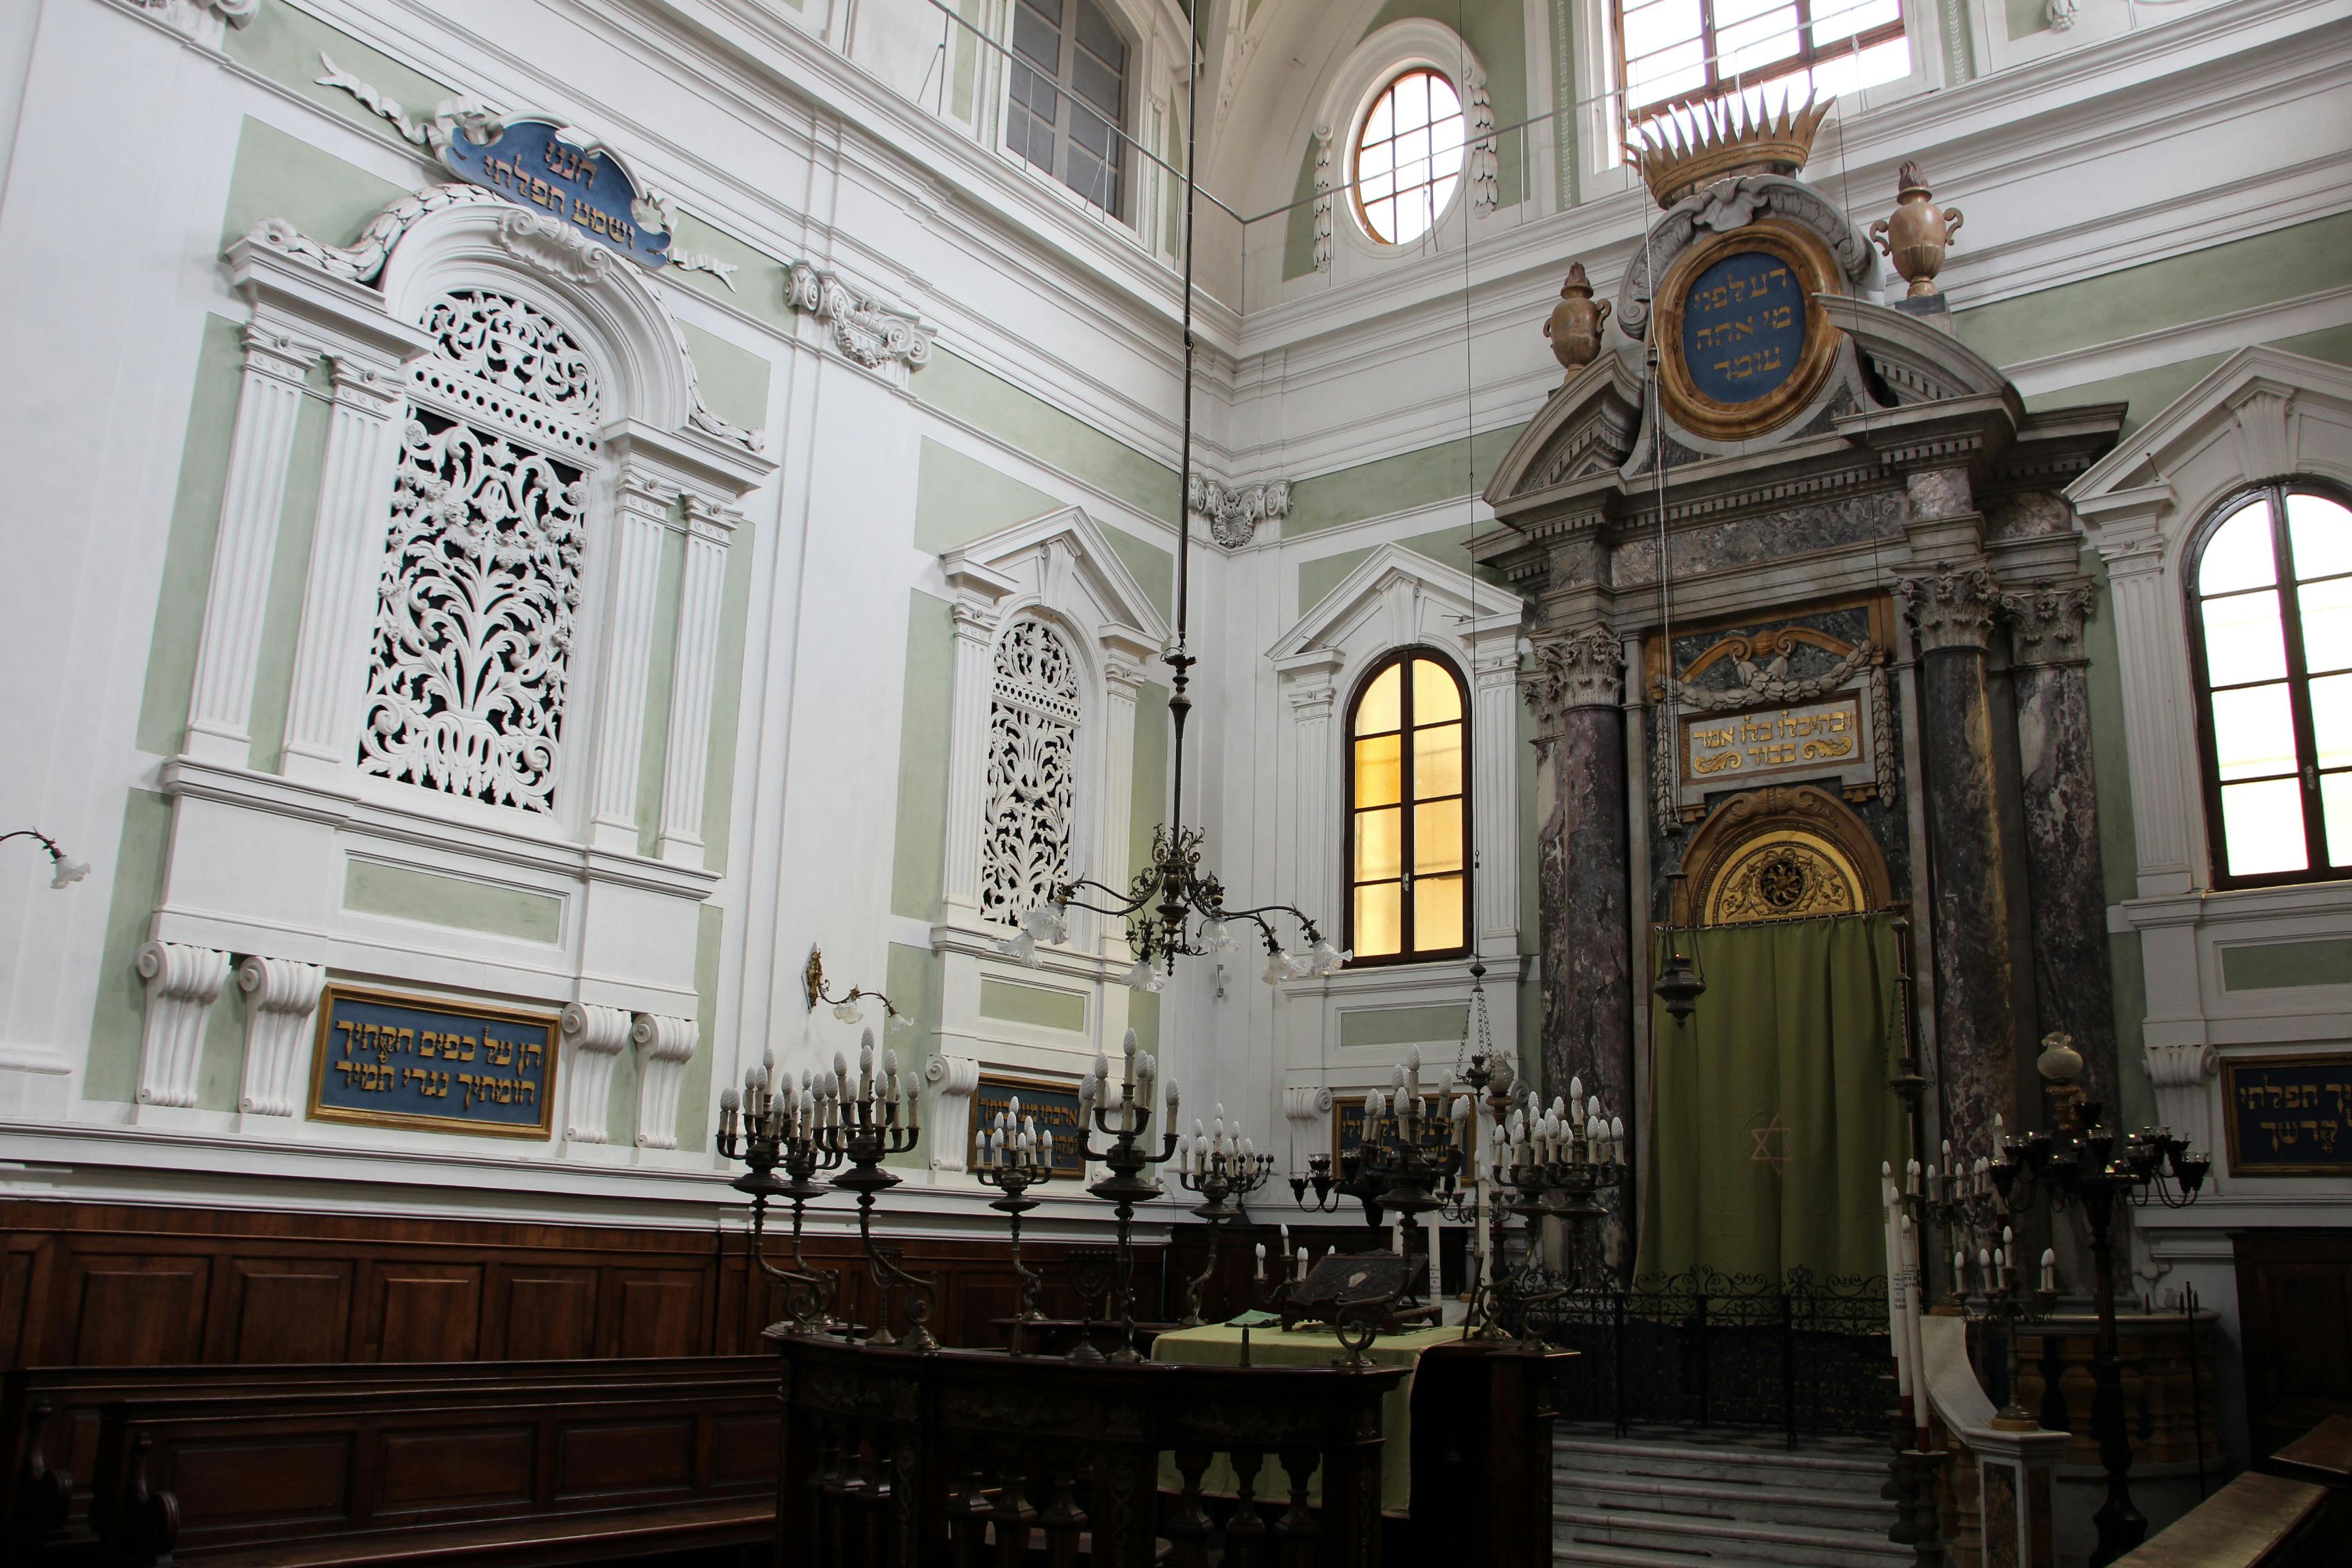 Ingressos para a Sinagoga de Siena